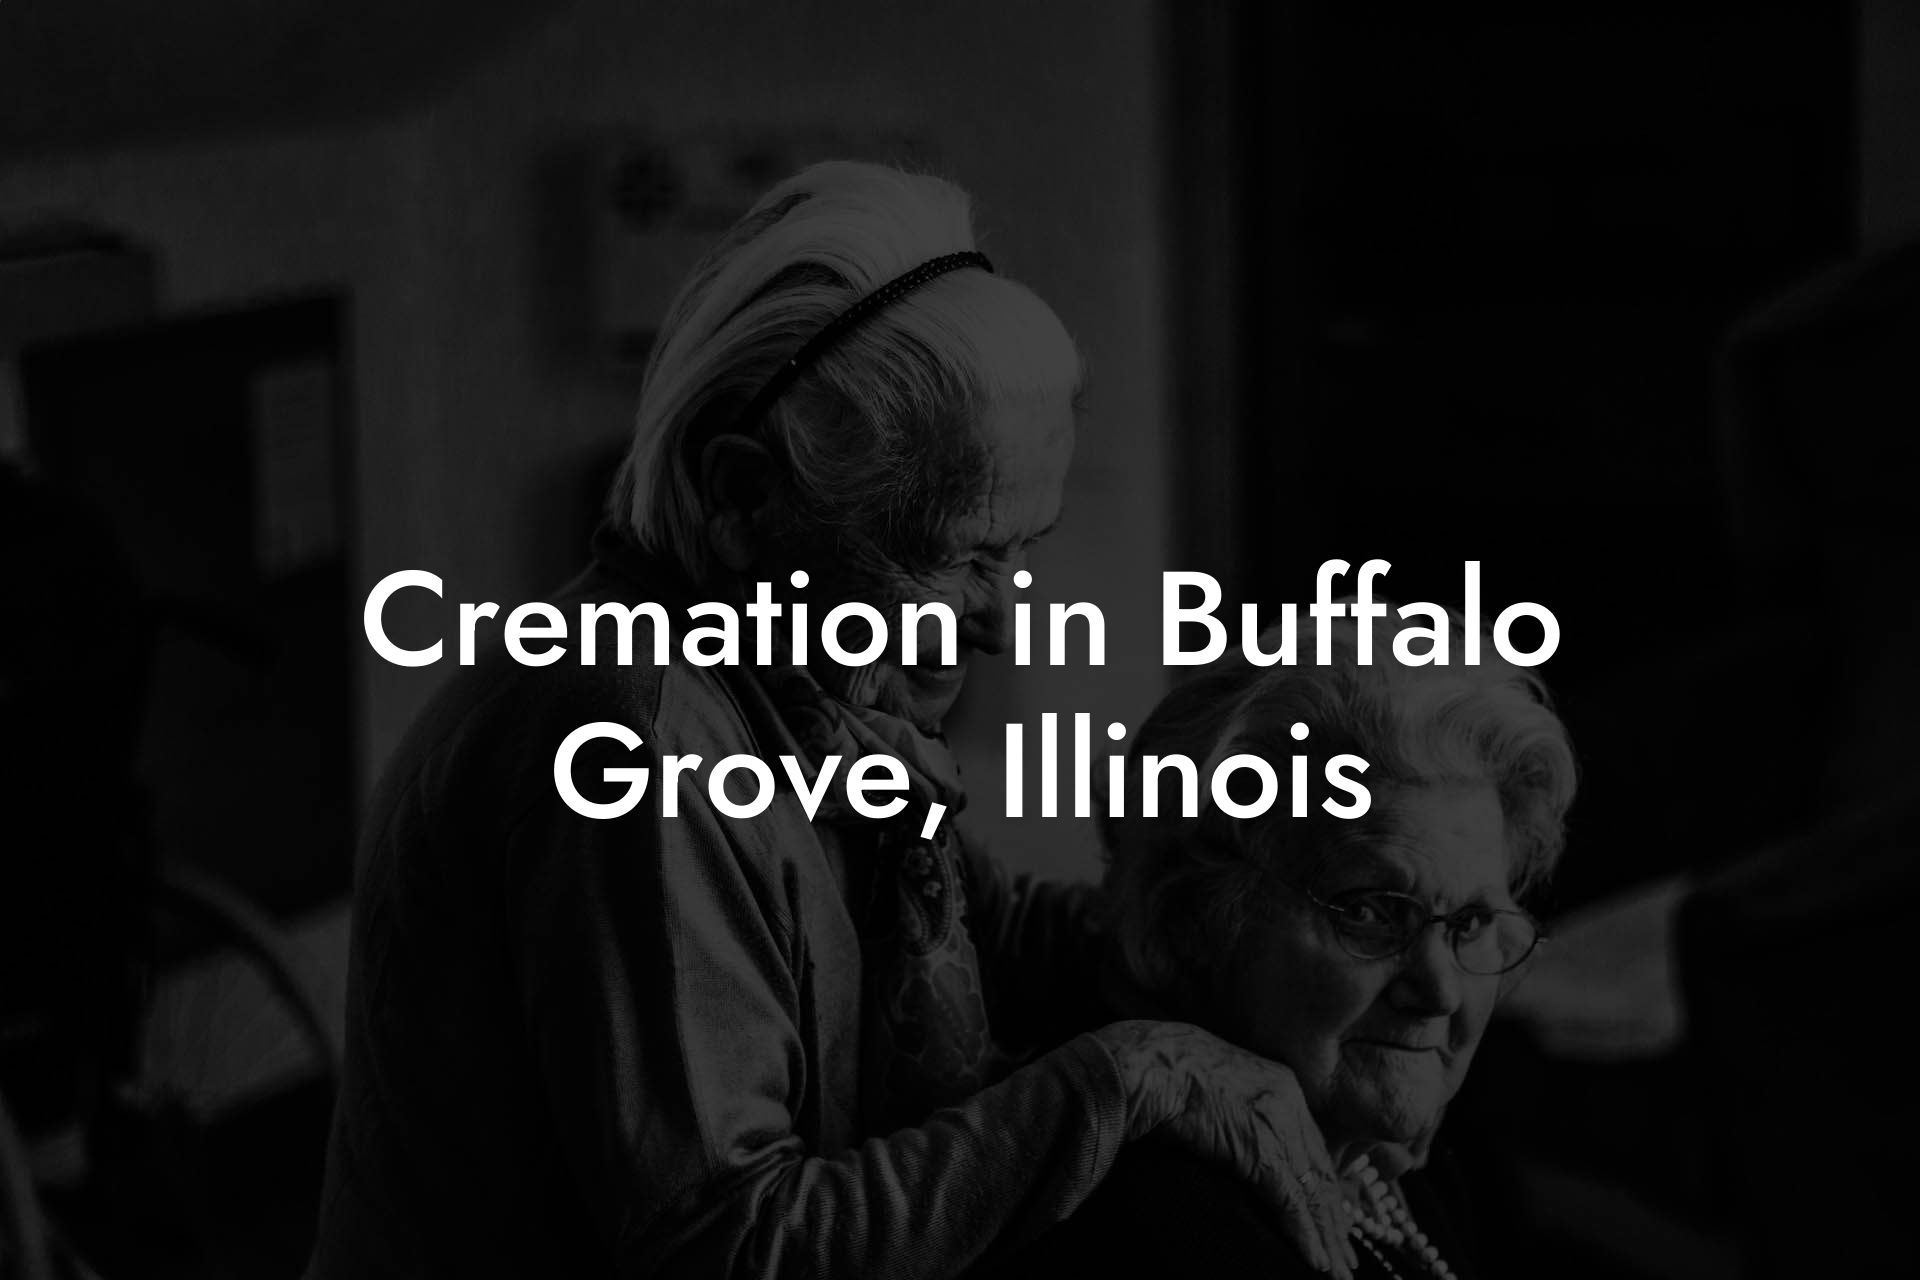 Cremation in Buffalo Grove, Illinois